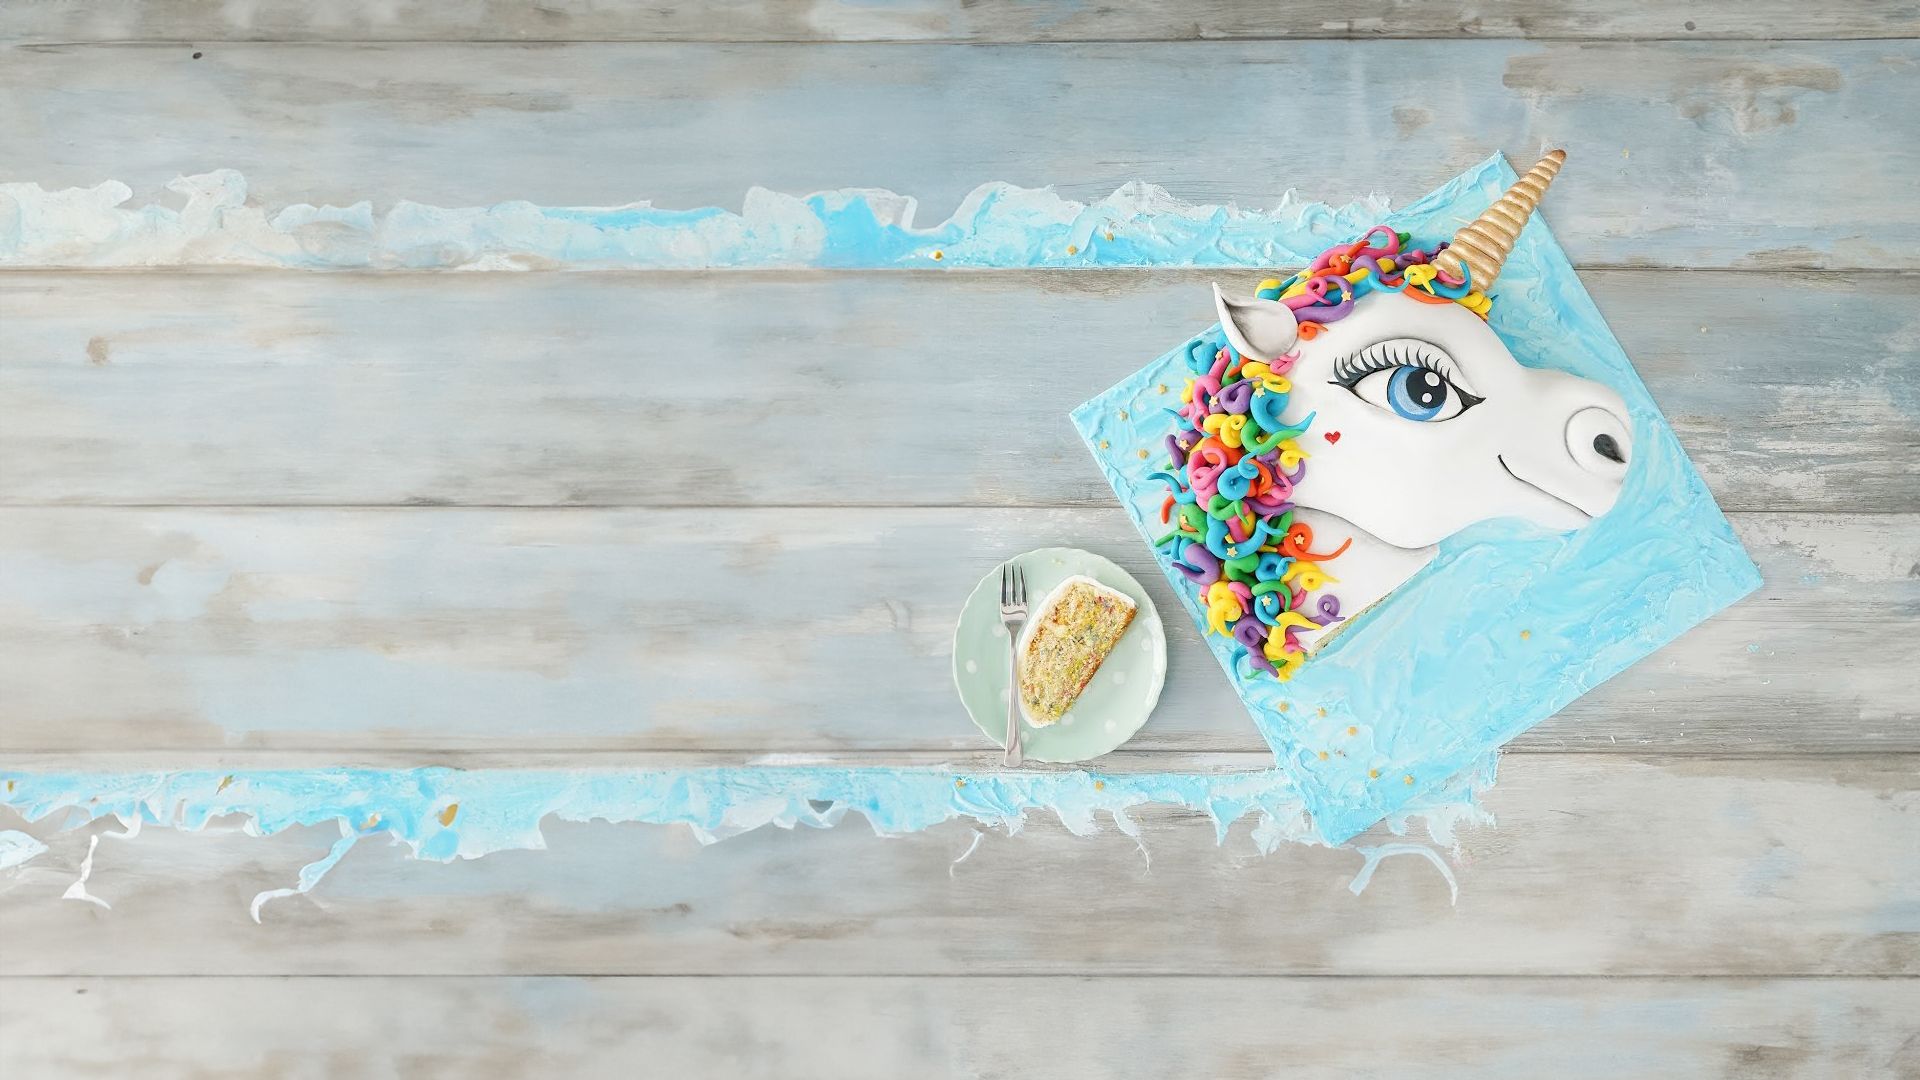 EINHORN 3D Torte / Unicorn Cake / Regenbogen Motivtorte